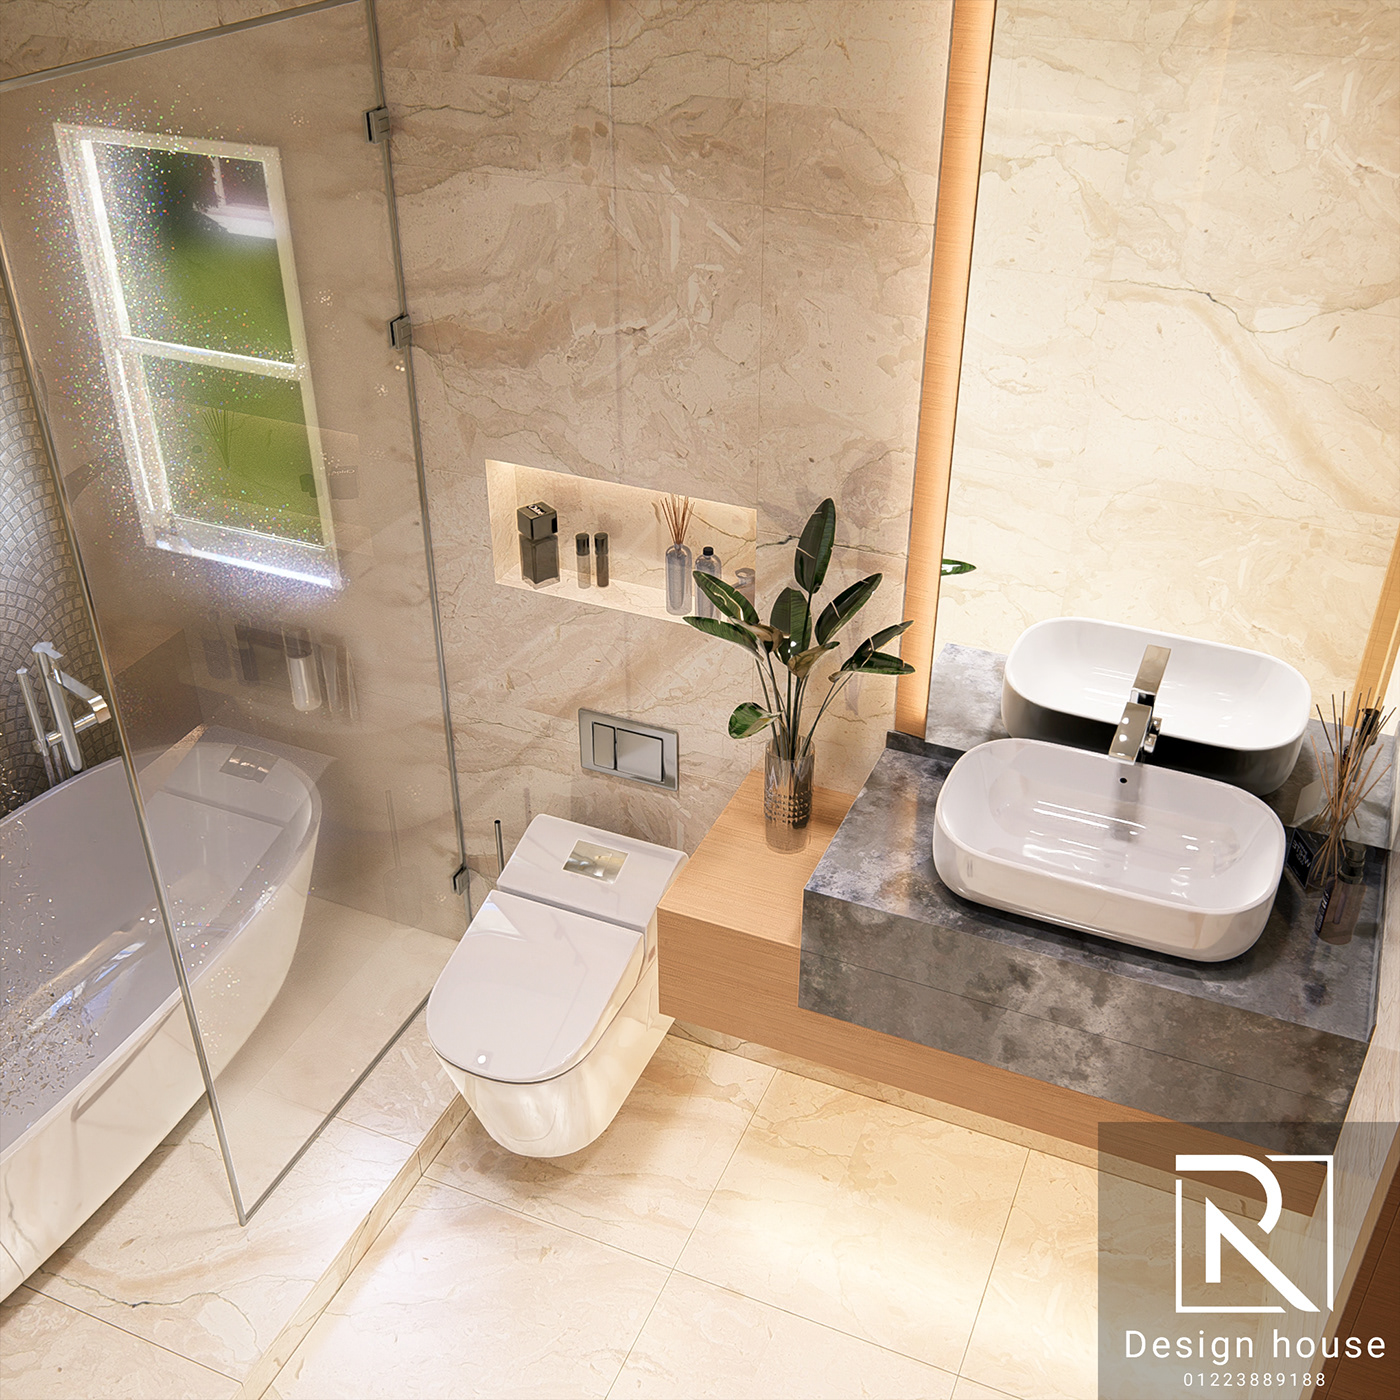 3 Bathrooms unit options interior design  Render 3D architecture visualization toilet bathroom modern design